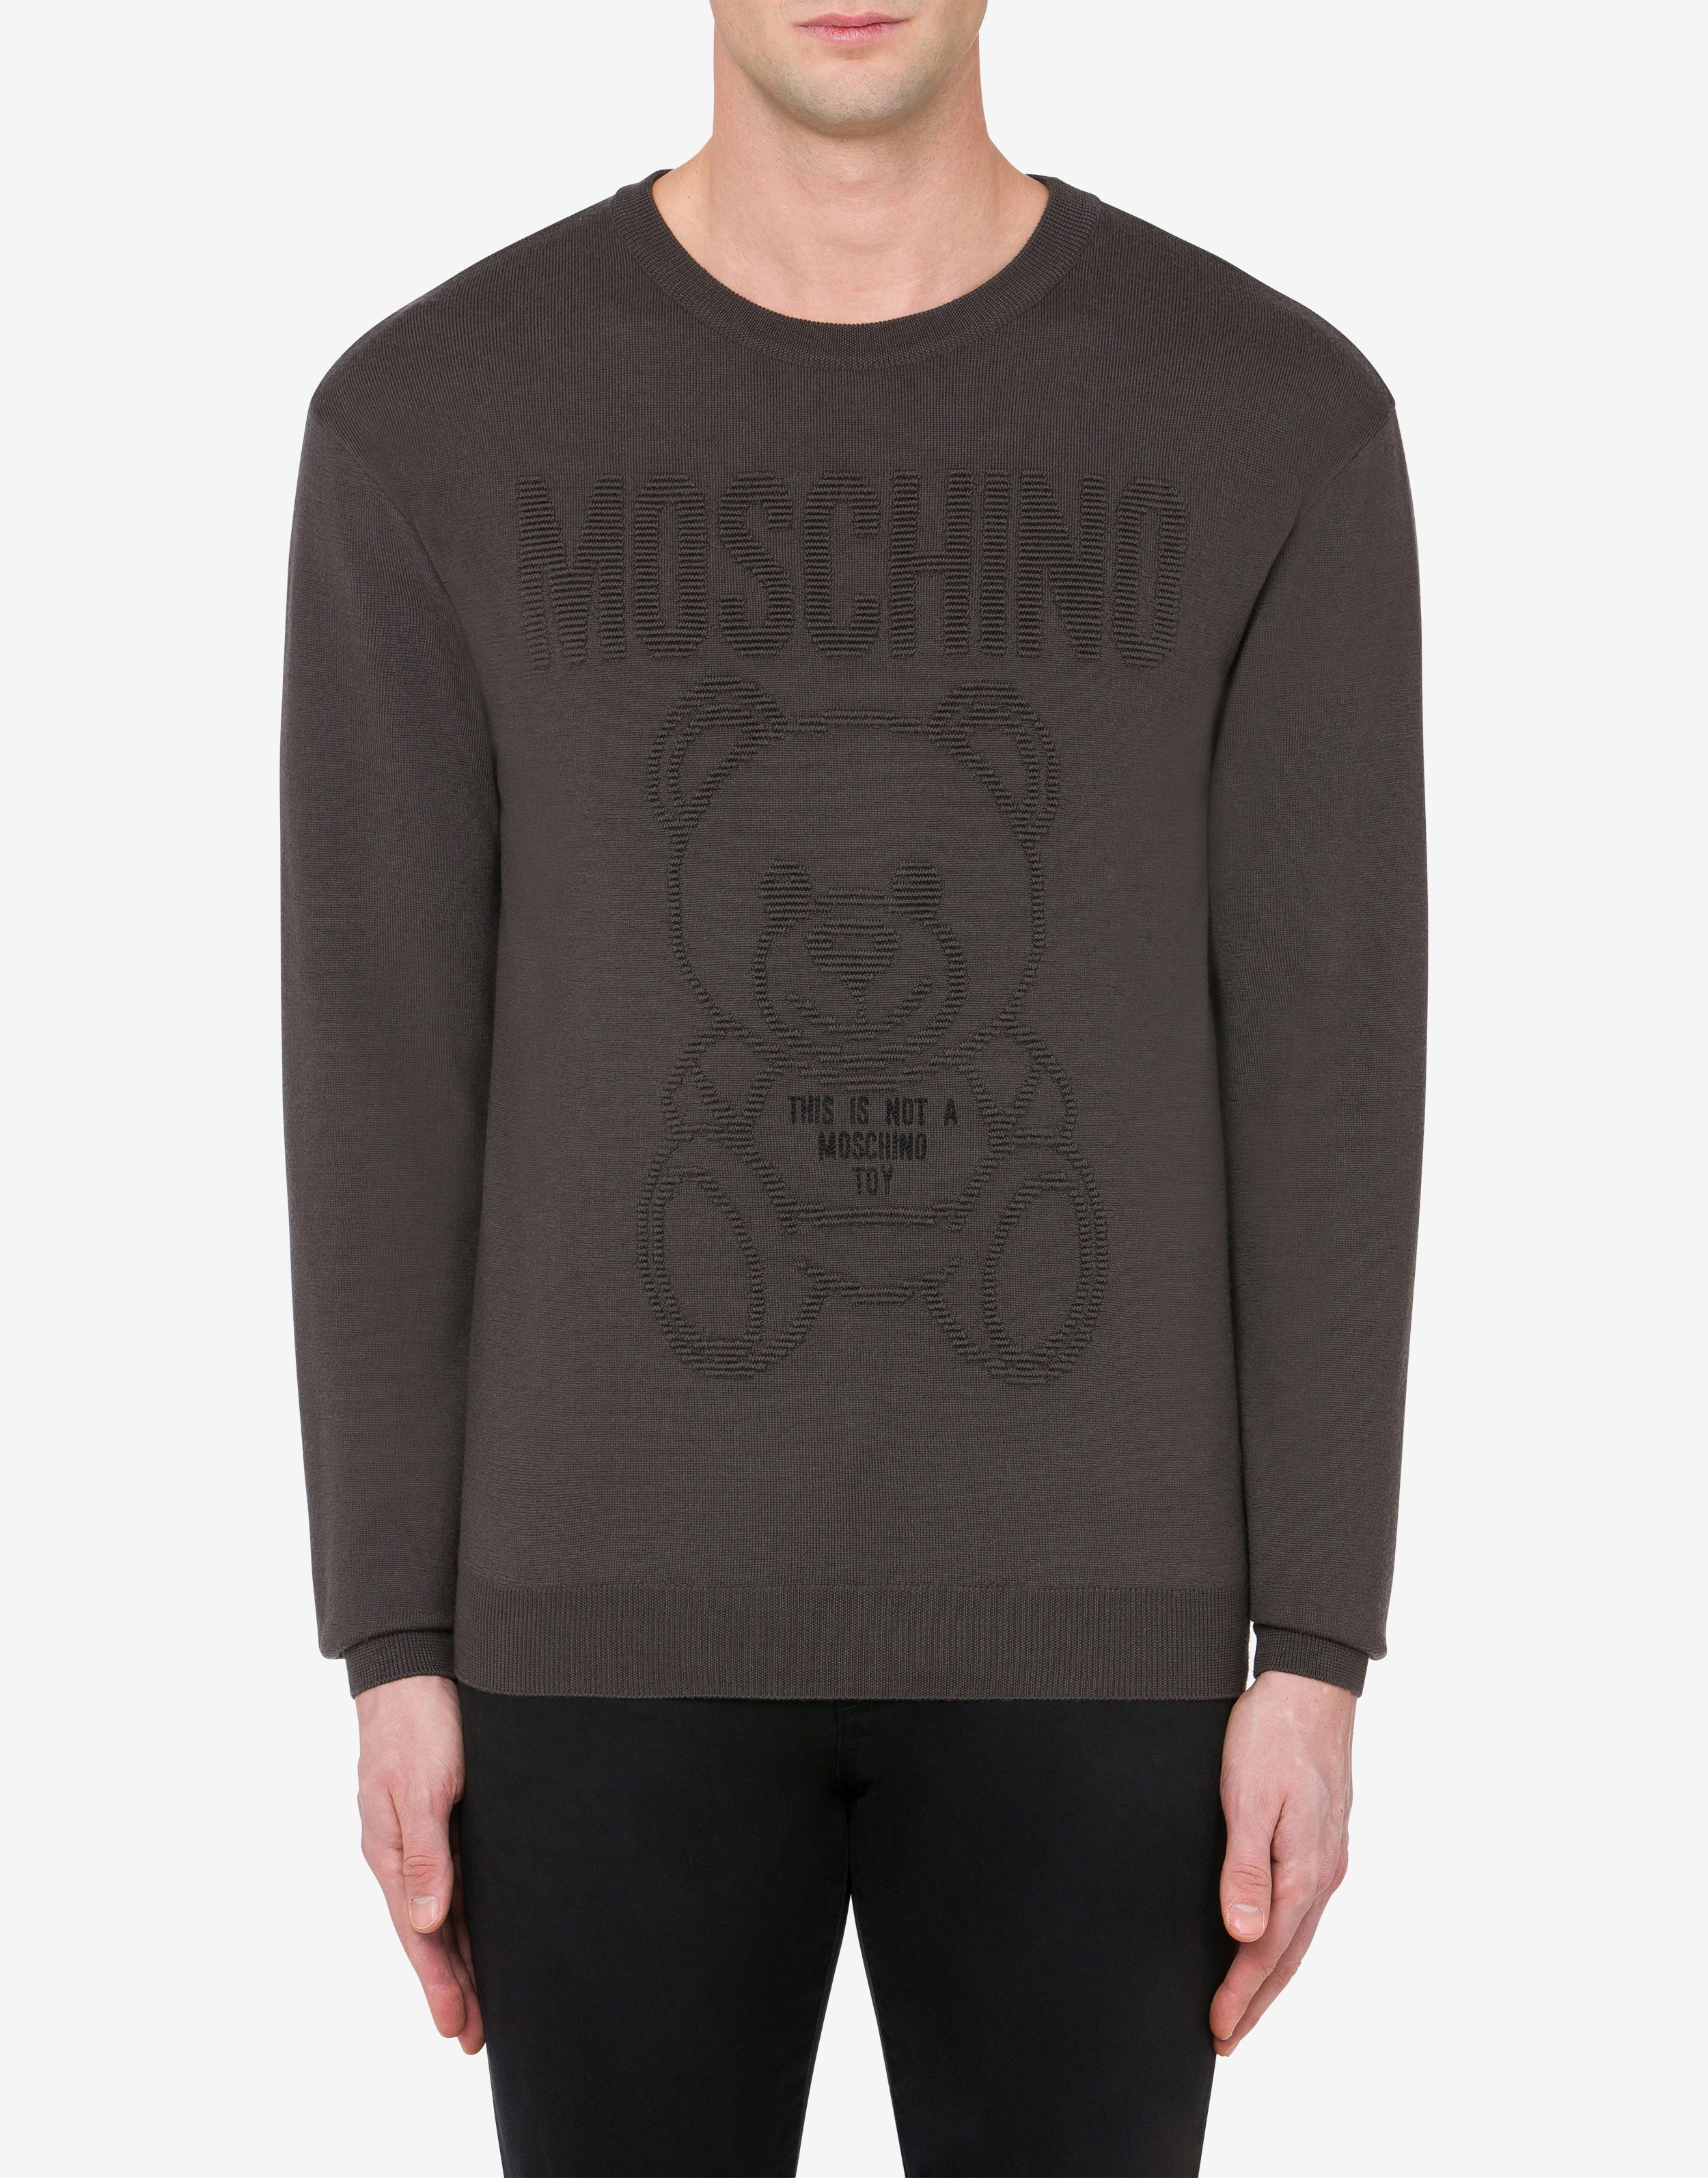 Moschino Teddy Bear ウール プルオーバー | Moschino Official Store